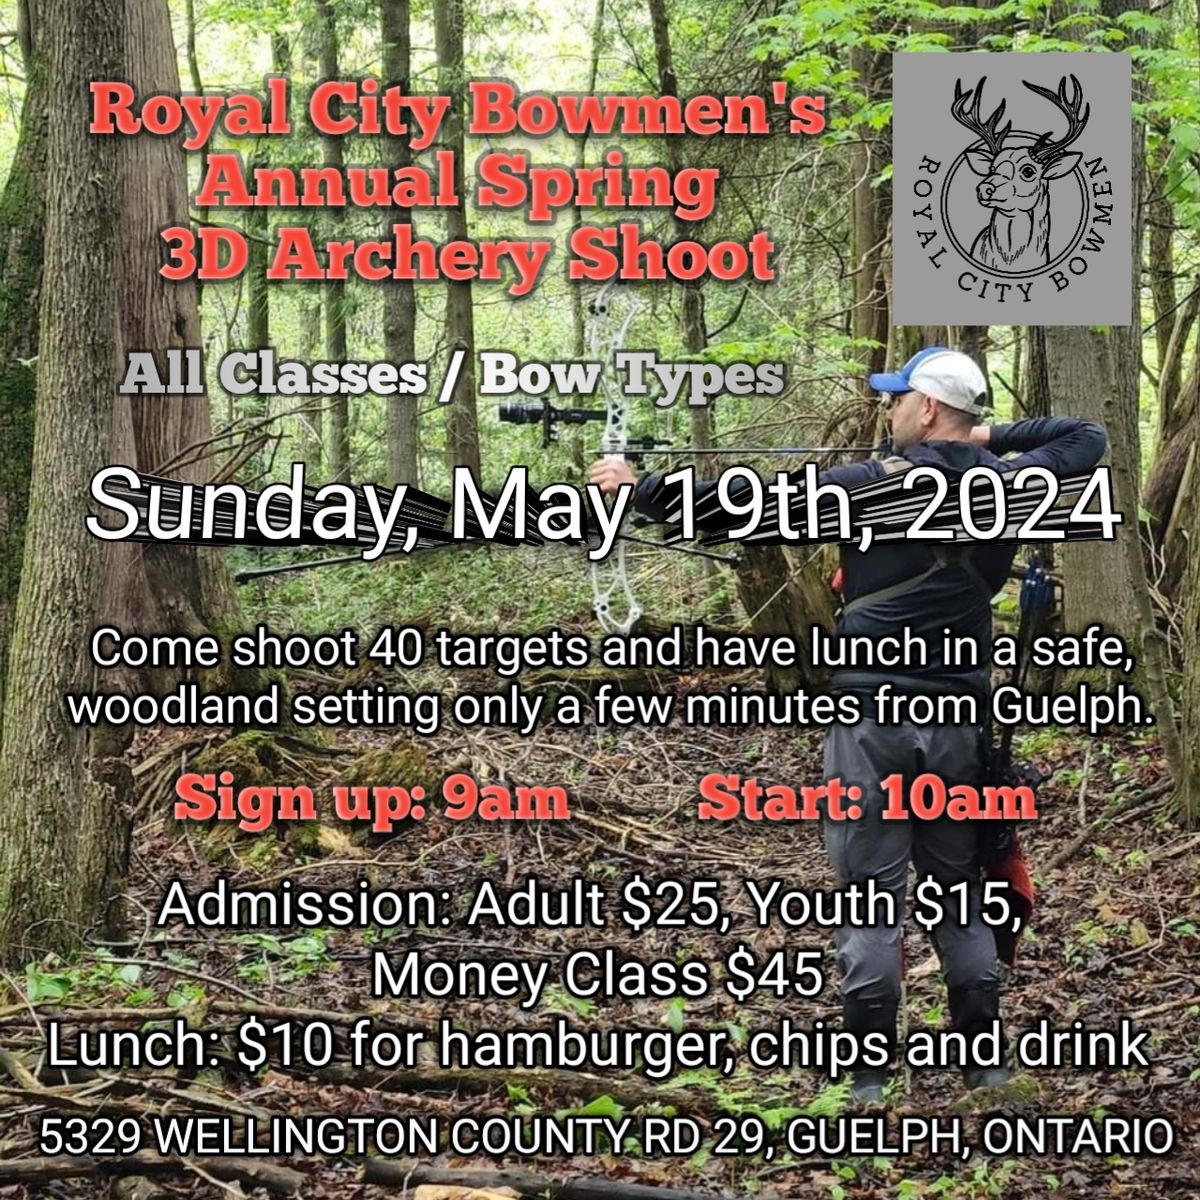 Royal City Bowmen's Annual Spring 3D Archery Shoot - Sunday, May 19th 2024